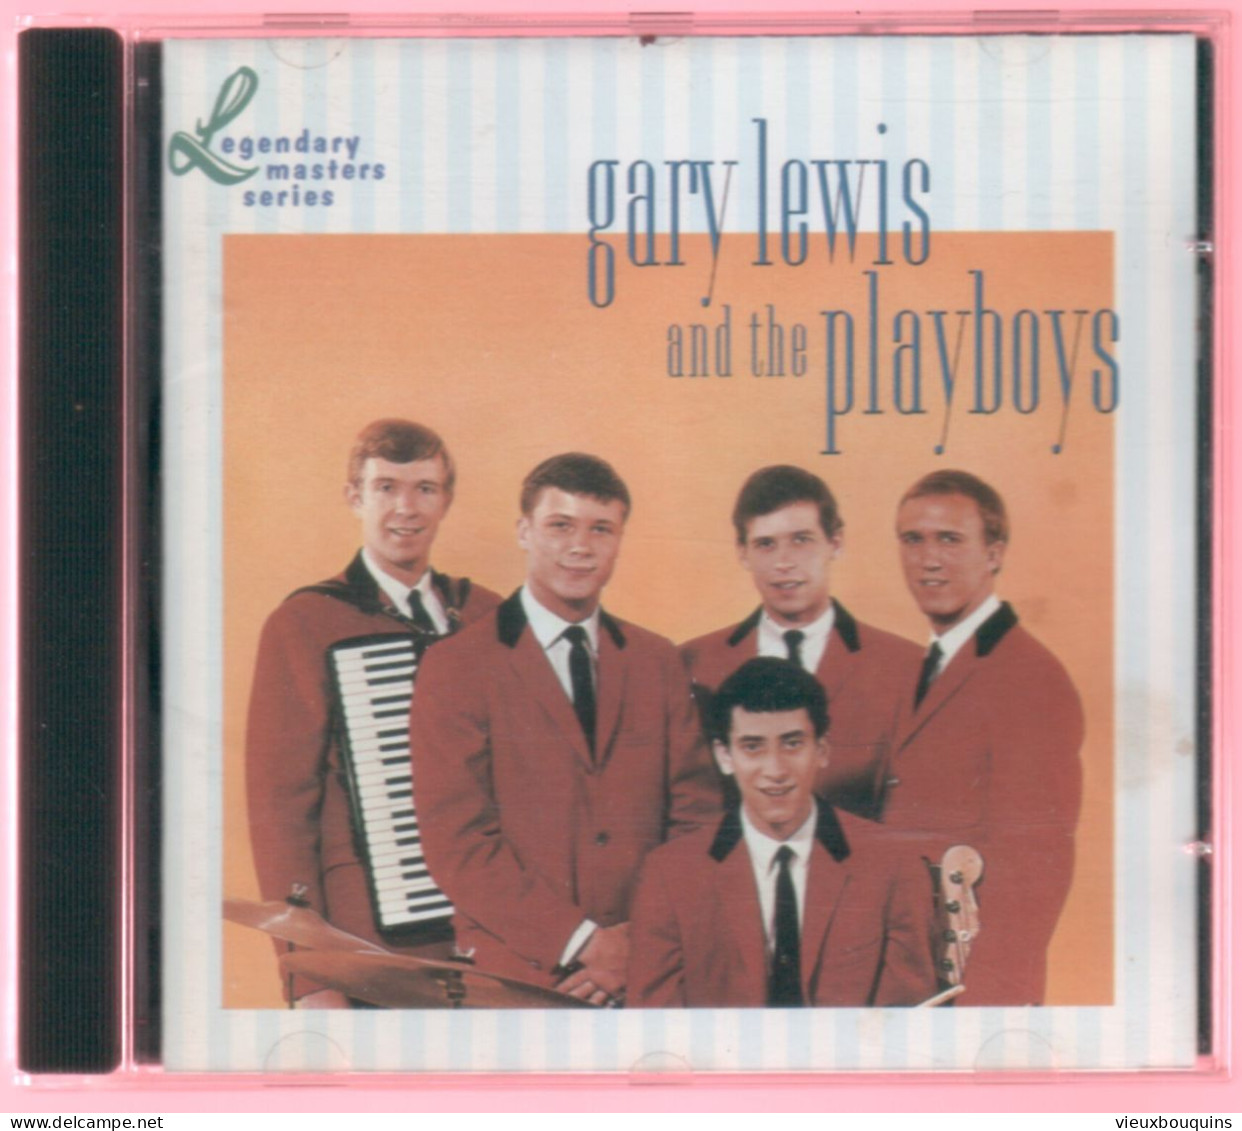 GARY LEWIS AND THE PLAYBOYS (Legendary Masters Series) - Otros - Canción Inglesa